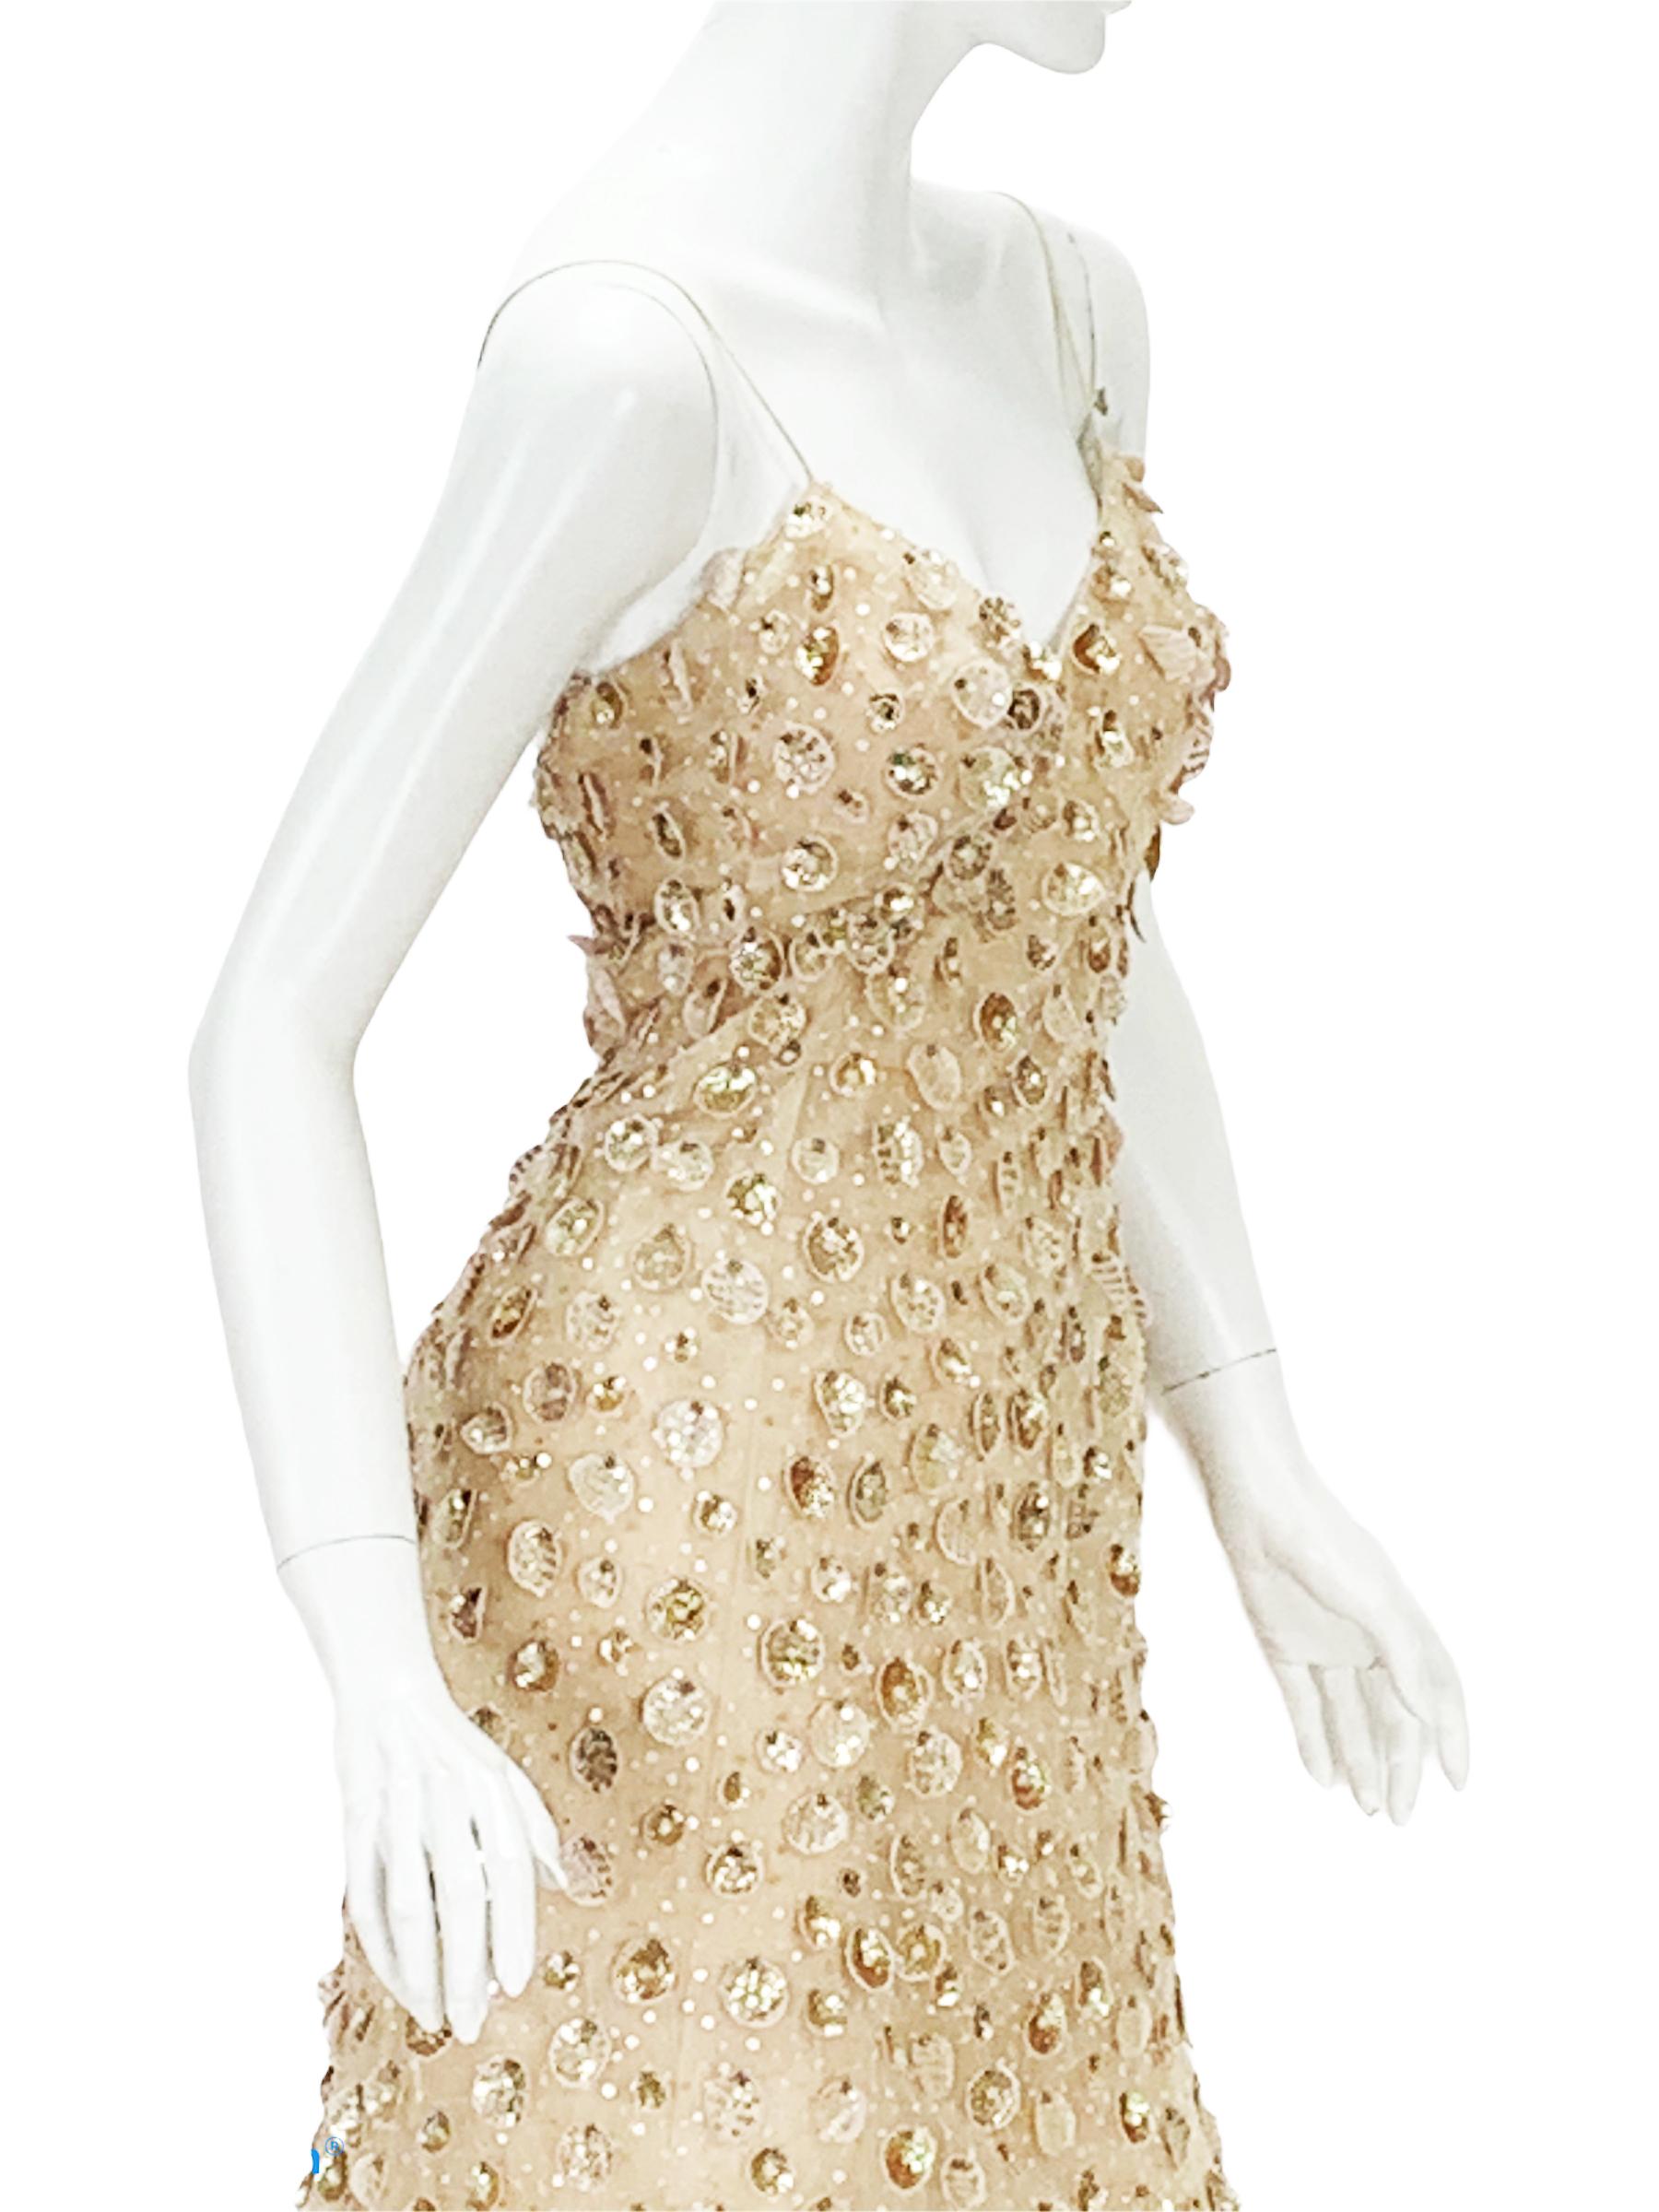 New Oscar de la Renta SS 2006 Runway Red Carpet Nude Sequin Embellished Gown 8 2